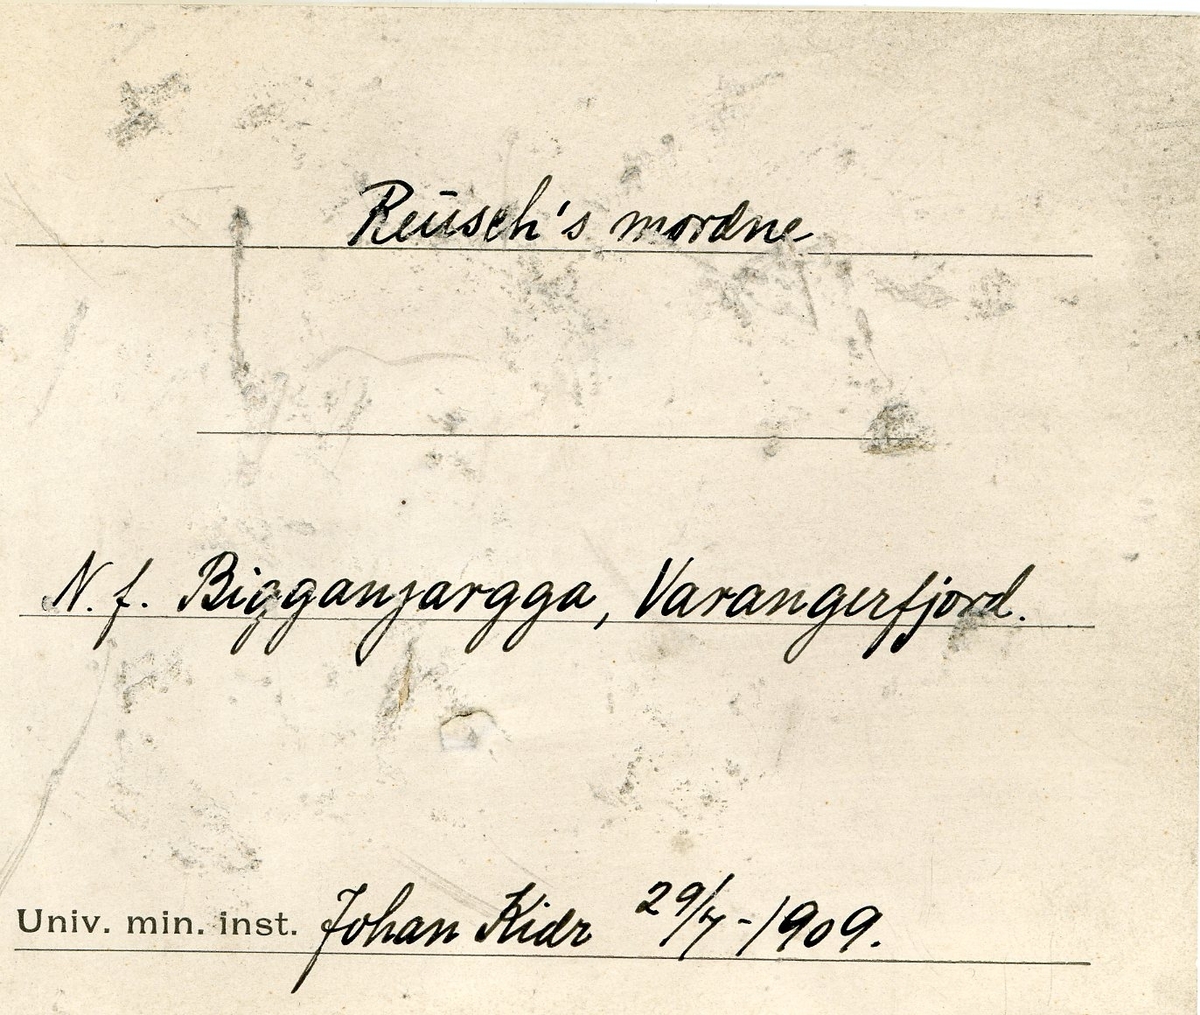 Etikett i eske:
Reusch's moræne
N.f. Bigganjargga, Varangerfjord
Johan Kiær 28/7-1909